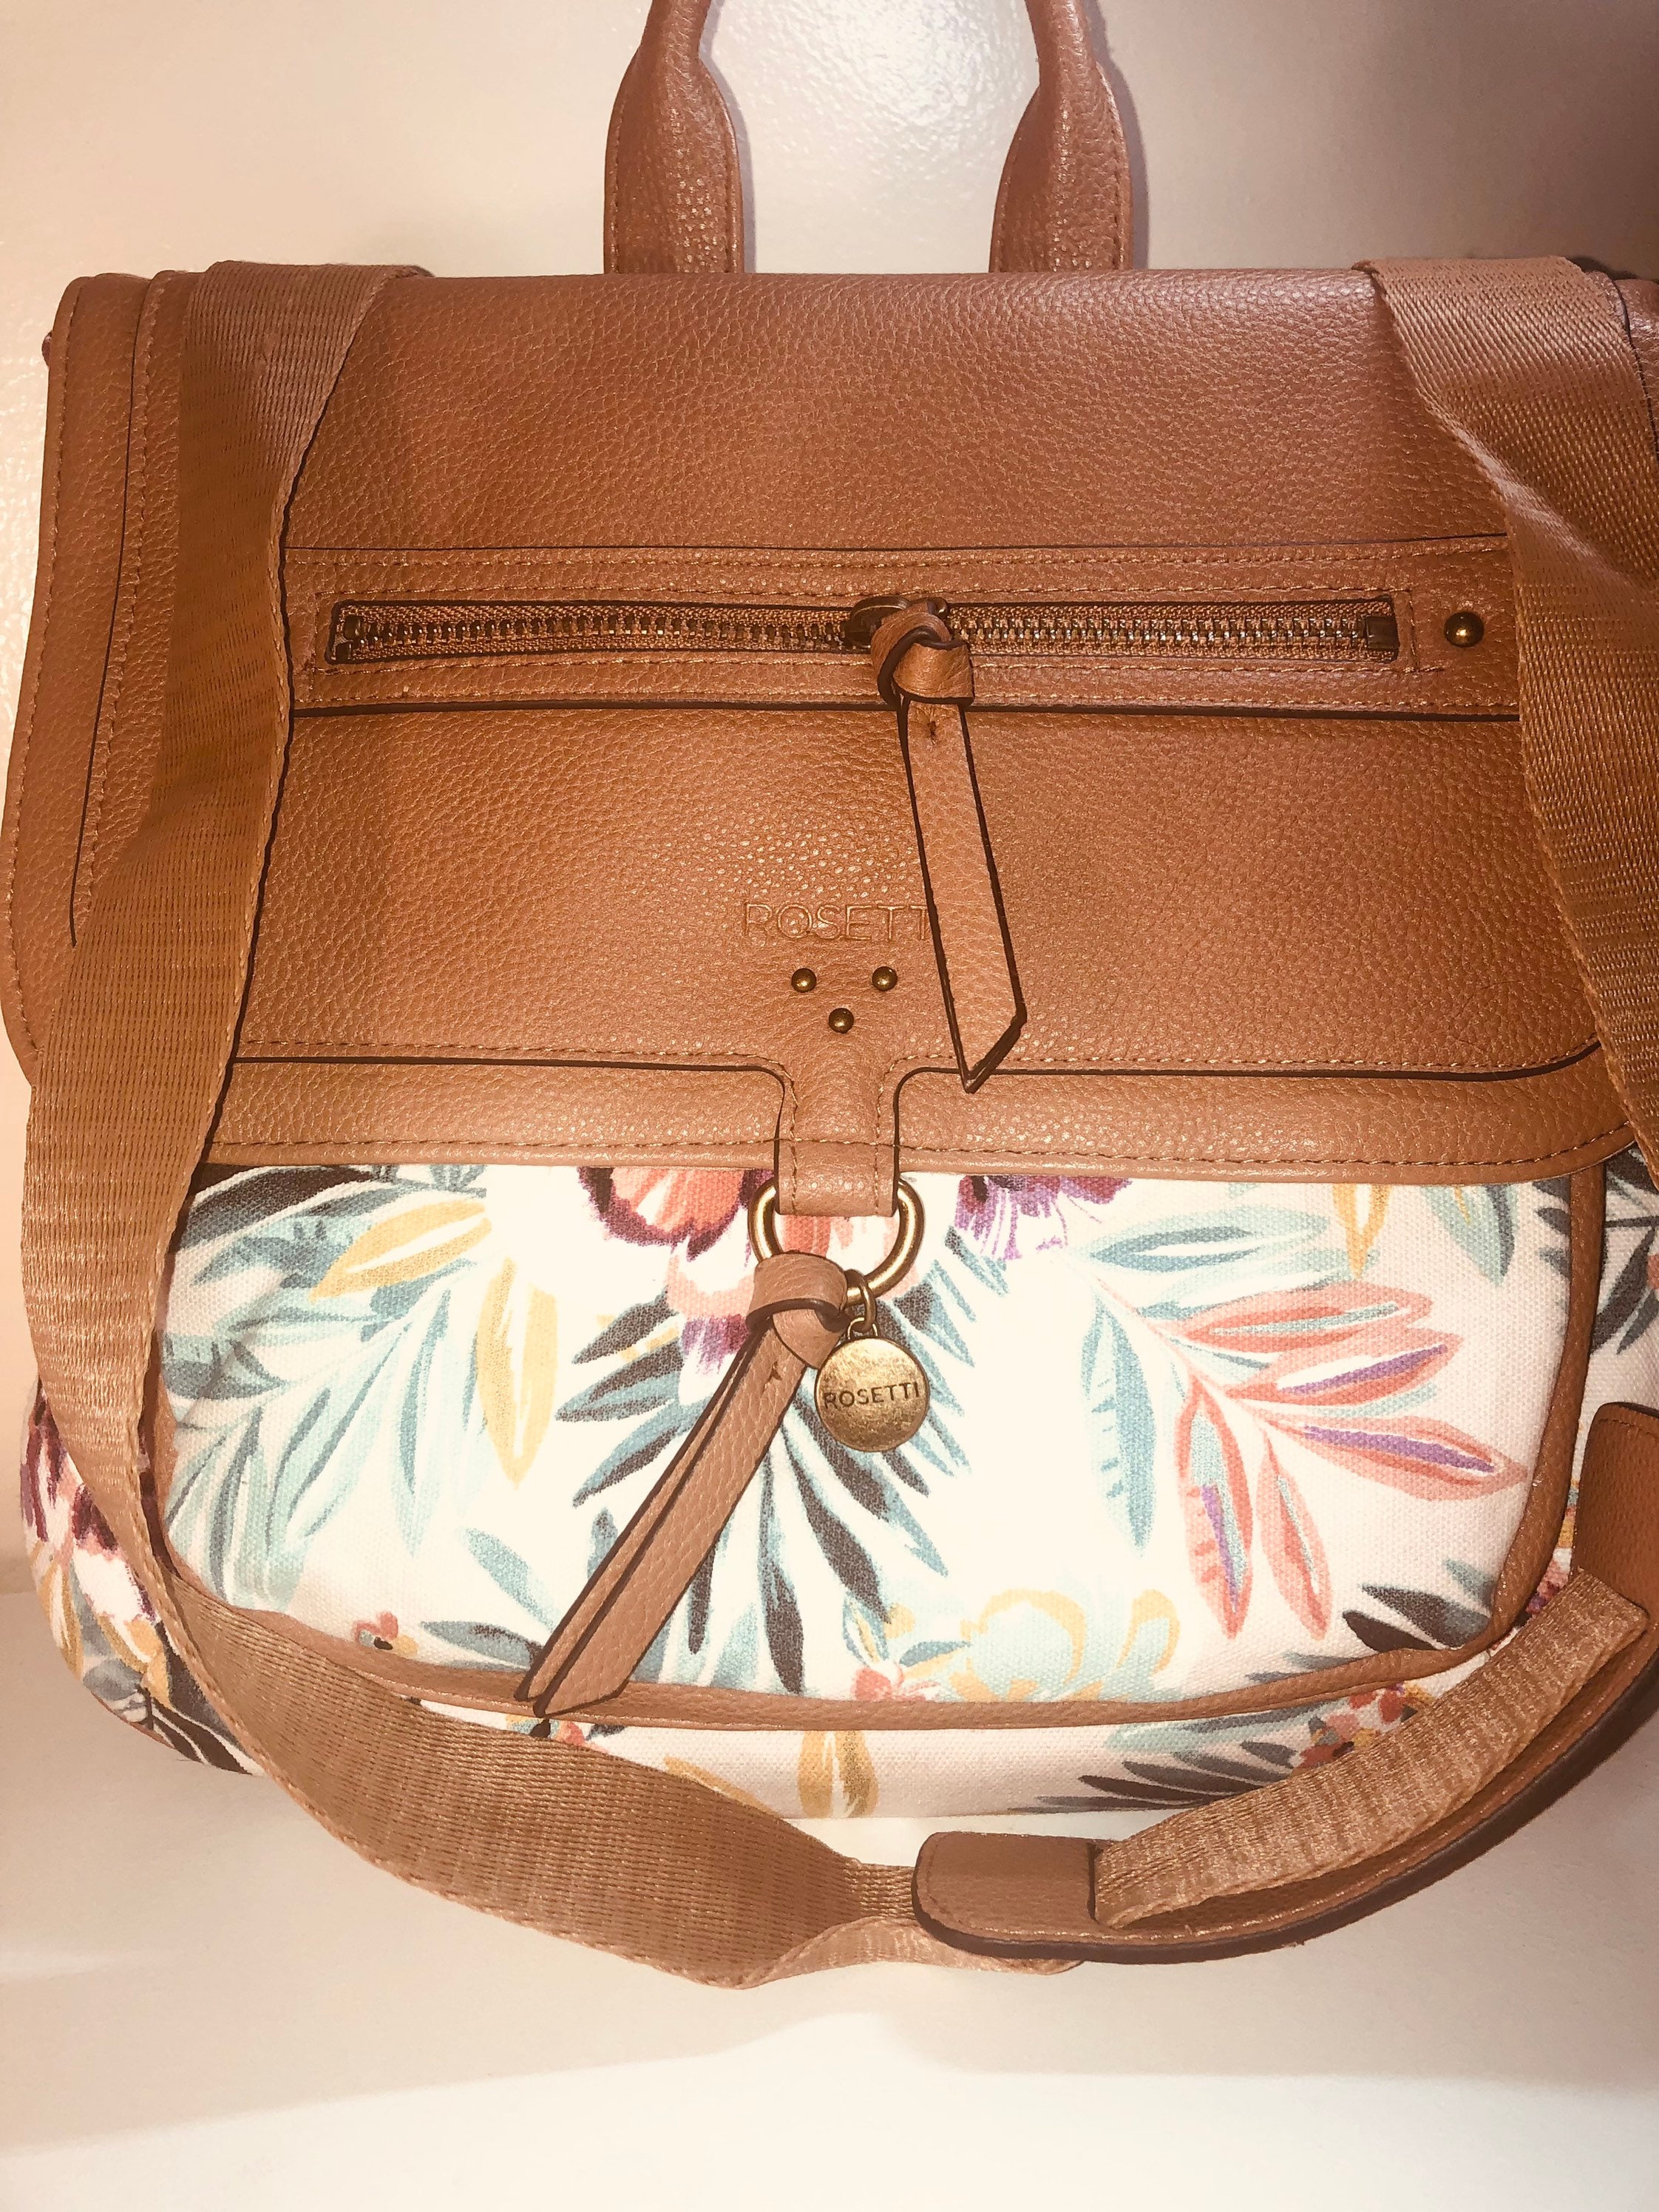 Rosetti | Bags | Rosetti Womens Crossbody Purse Shouldersatchel Bag Floral  Print Travel | Poshmark